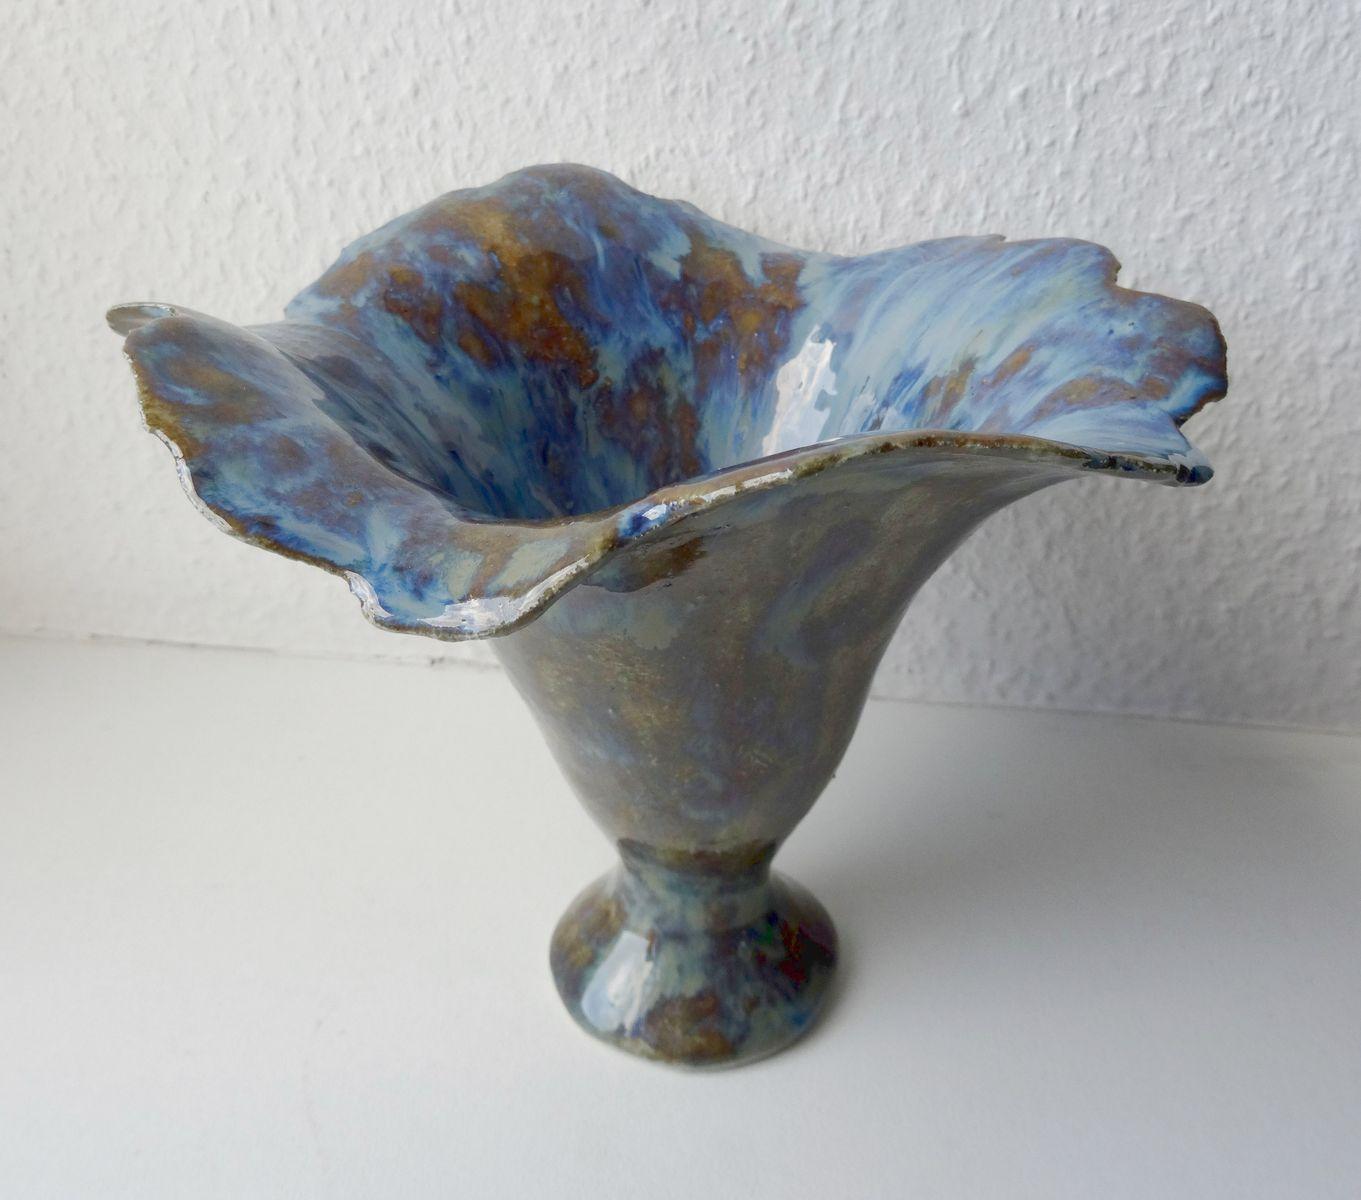 Vase blue flower. 2017. Stone mass, h 13 cm, diam. 15.5 cm